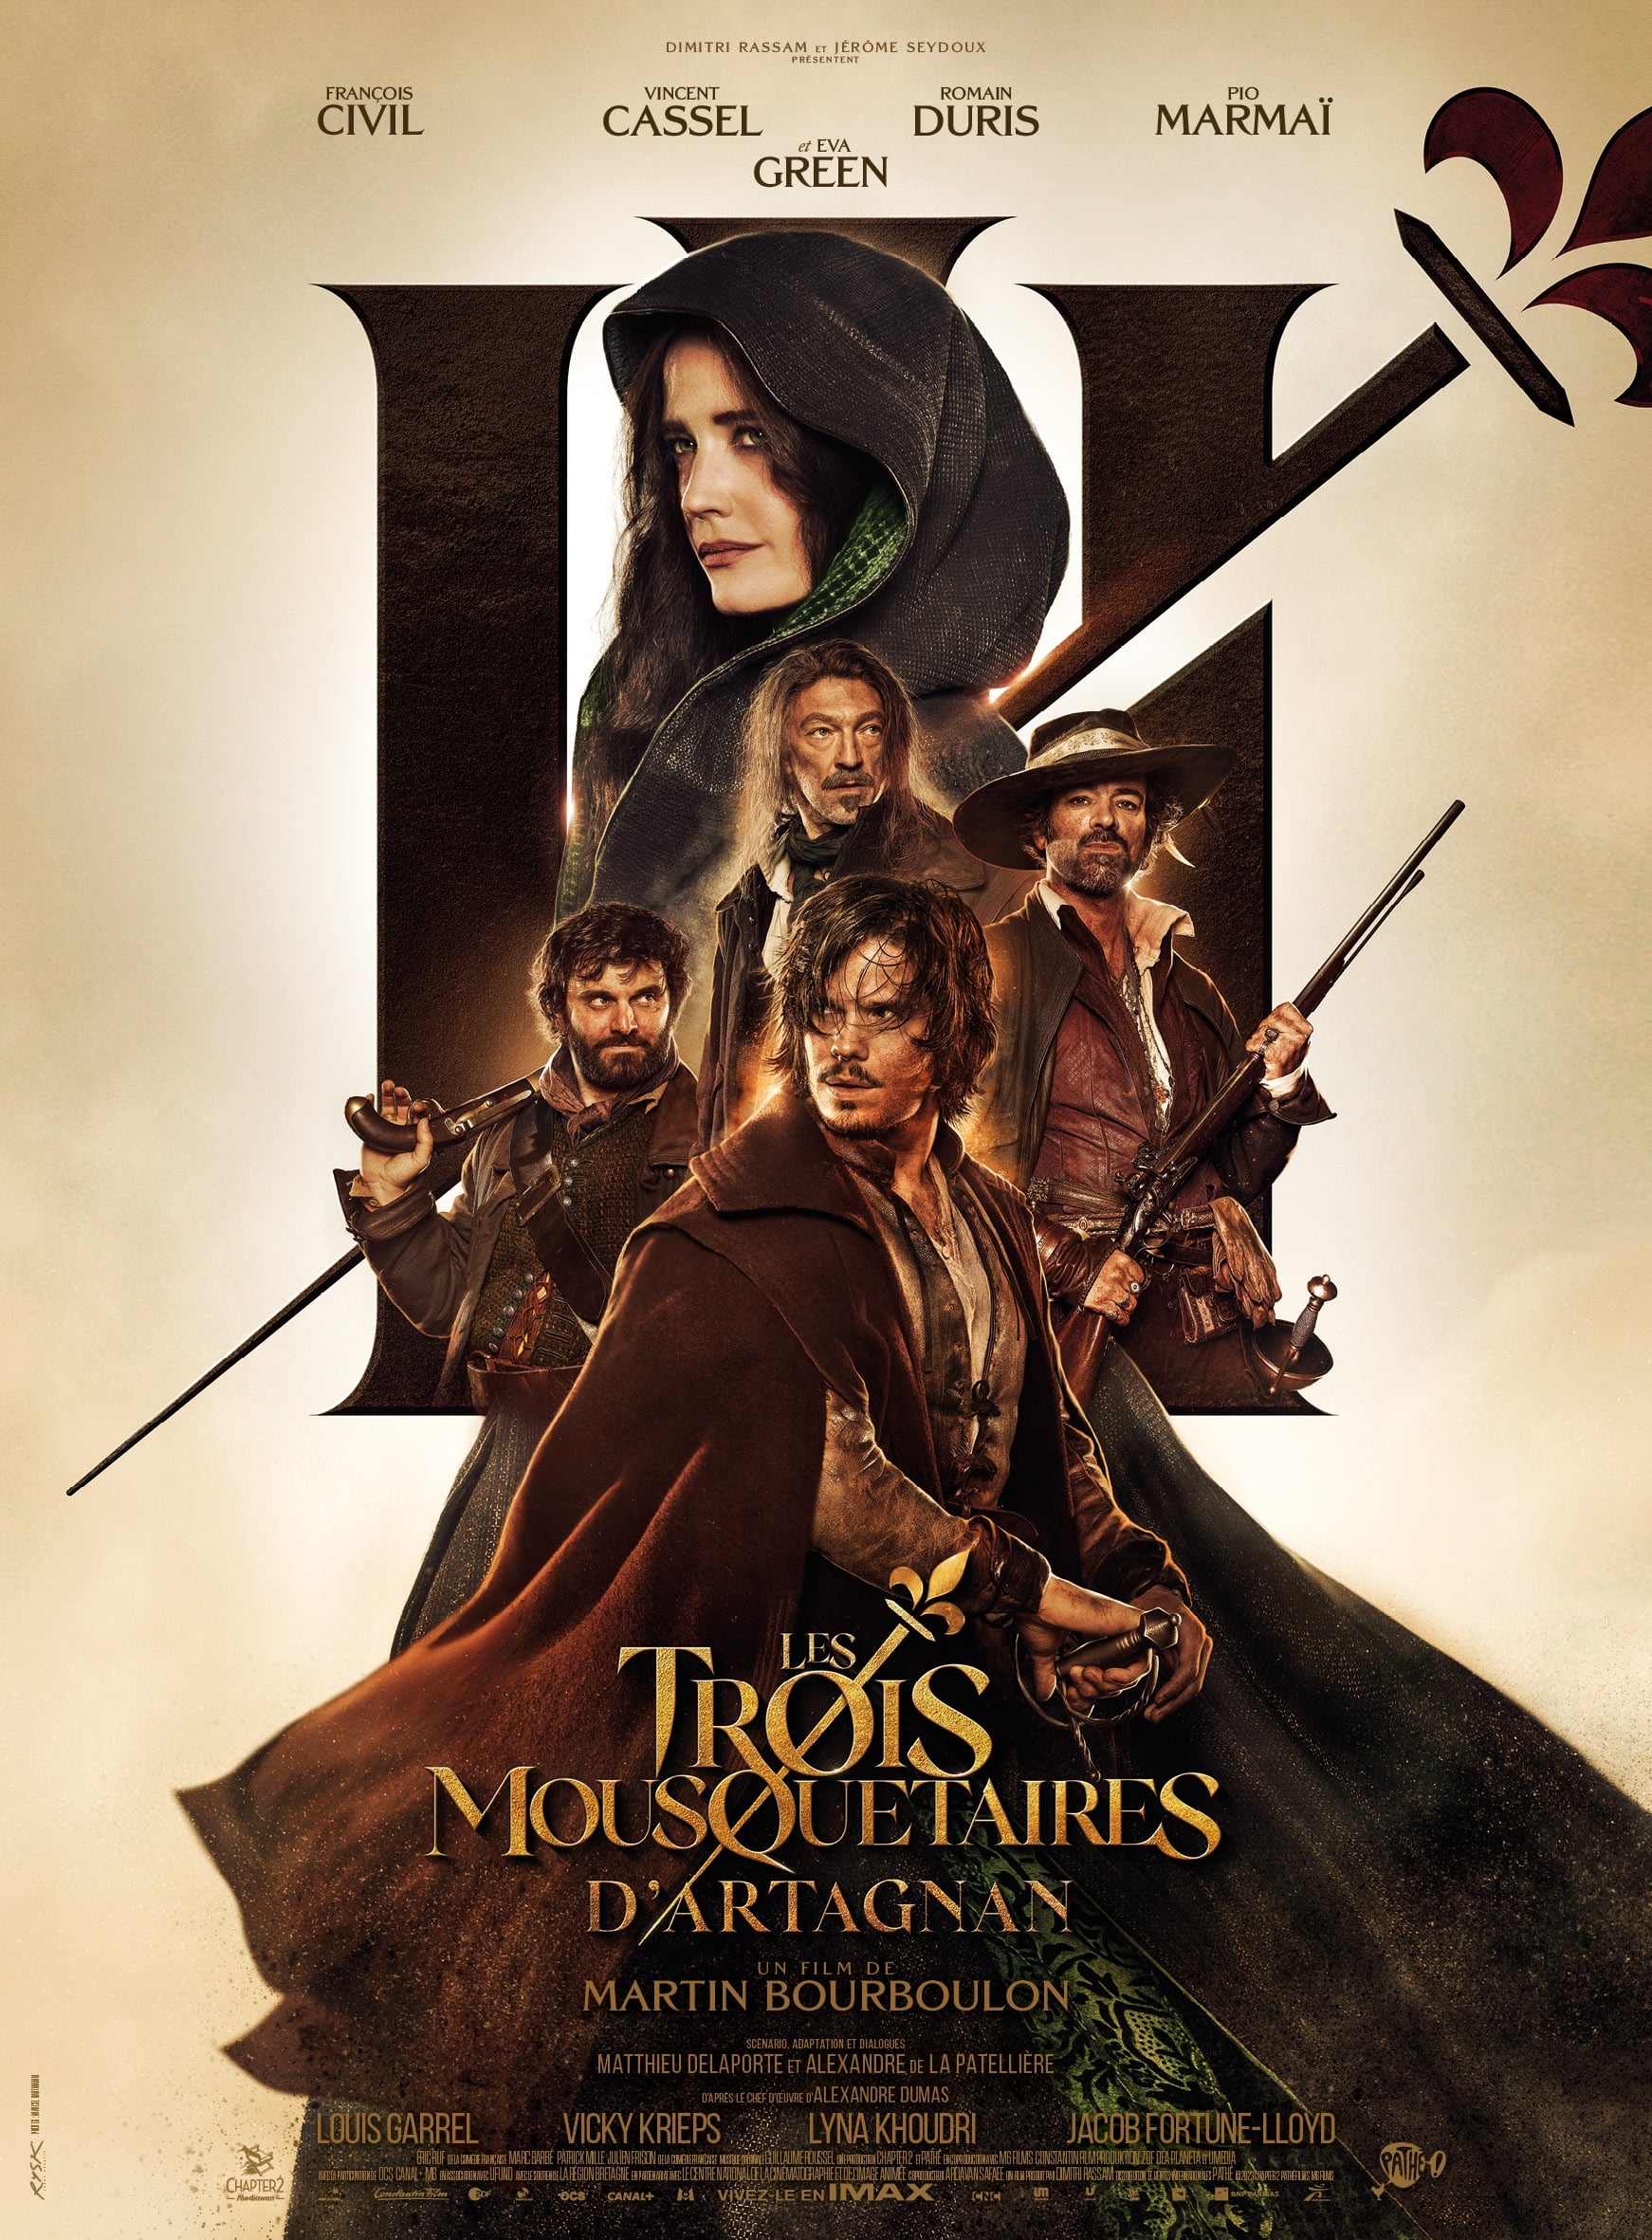 Los tres mosqueteros: D’Artagnan (2023) PLACEBO Full HD 1080p Latino